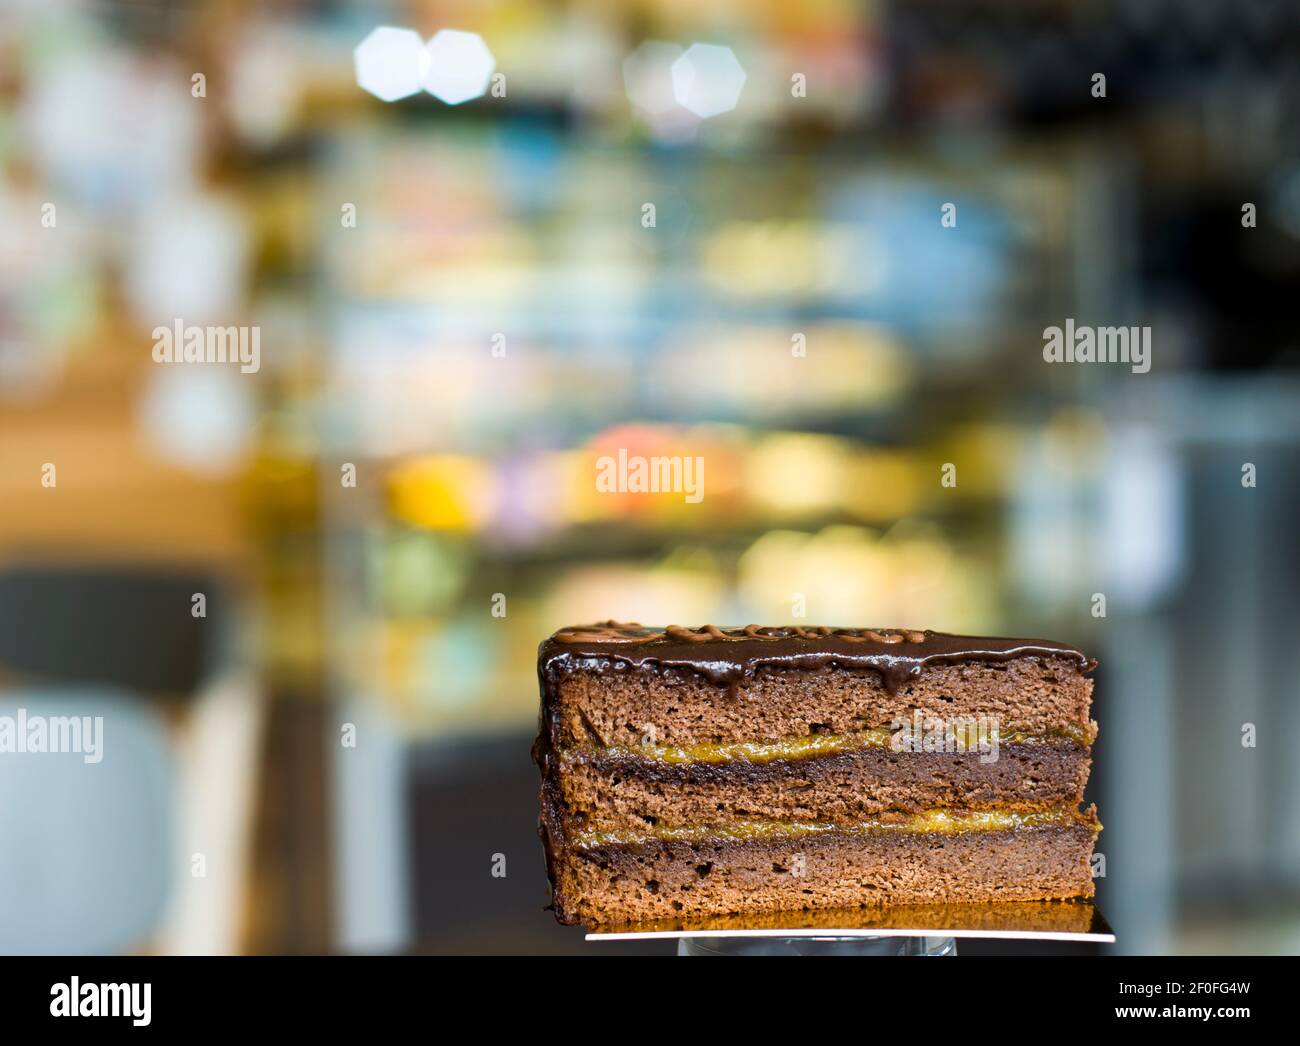 A piece of chocolate-jam layered cake, with bokeh background Stock Photo -  Alamy